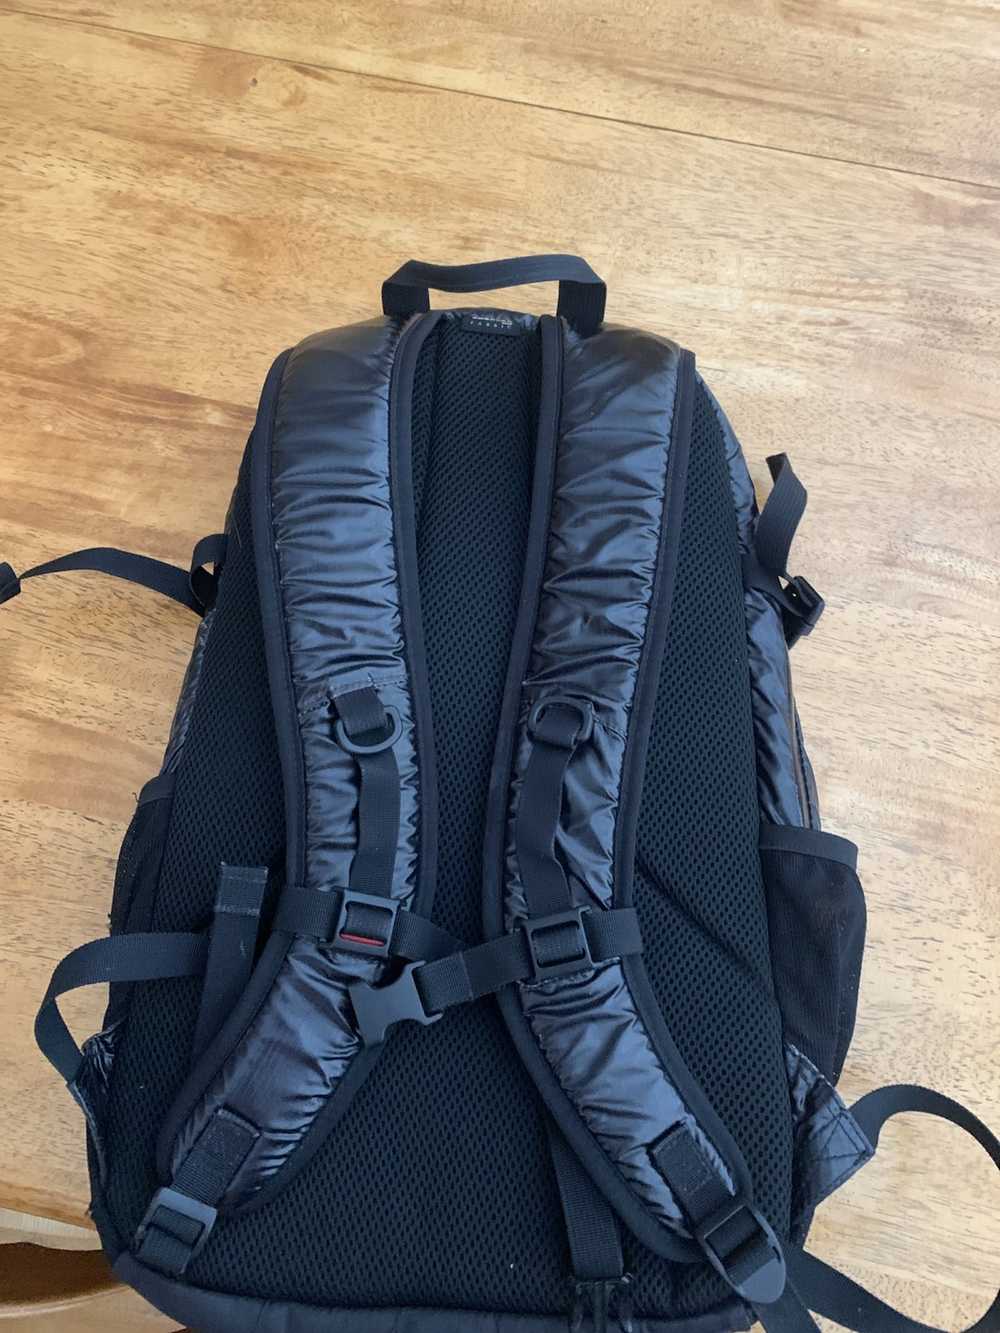 Supreme Supreme Backpack - image 2